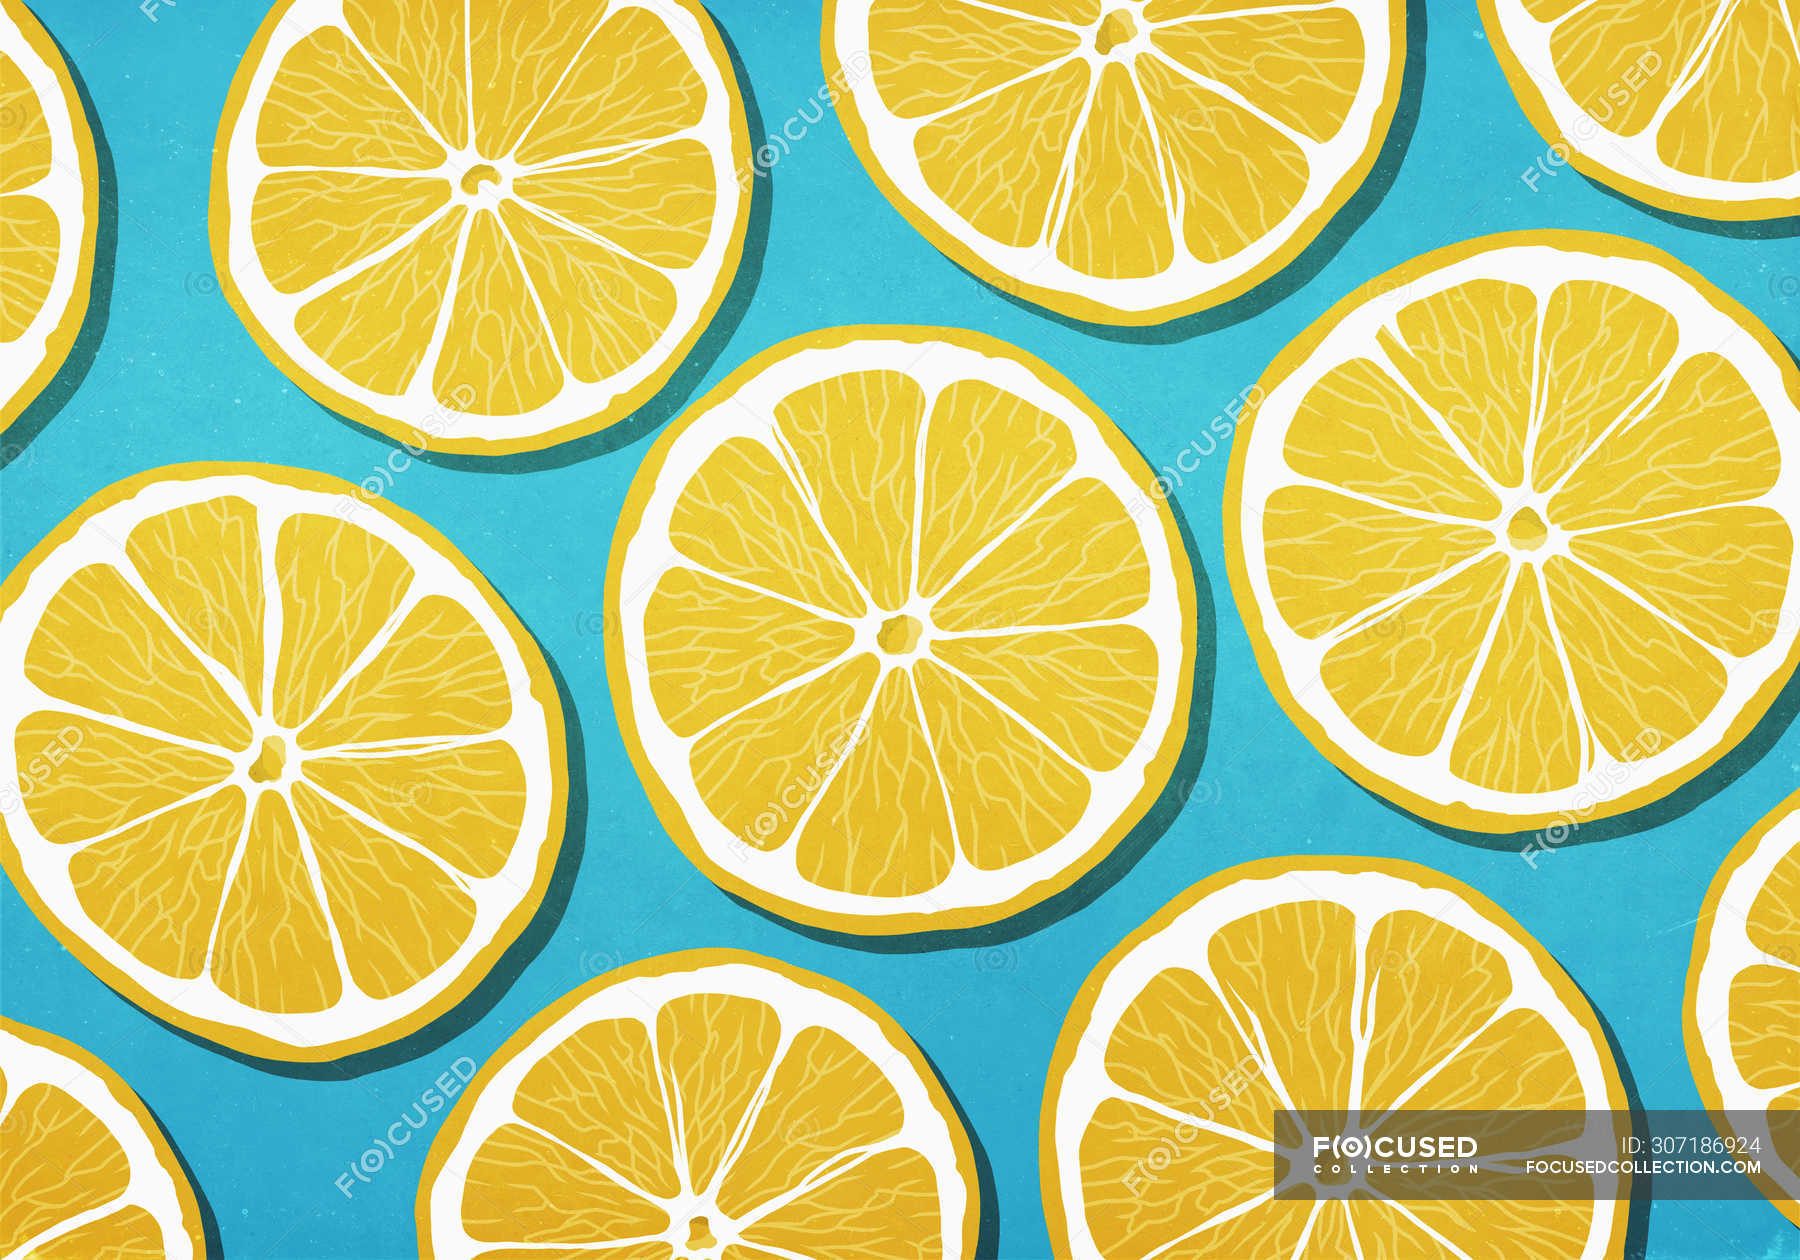 Vibrant yellow lemon slices against blue background — vibrant color, juicy  - Stock Photo | #307186924